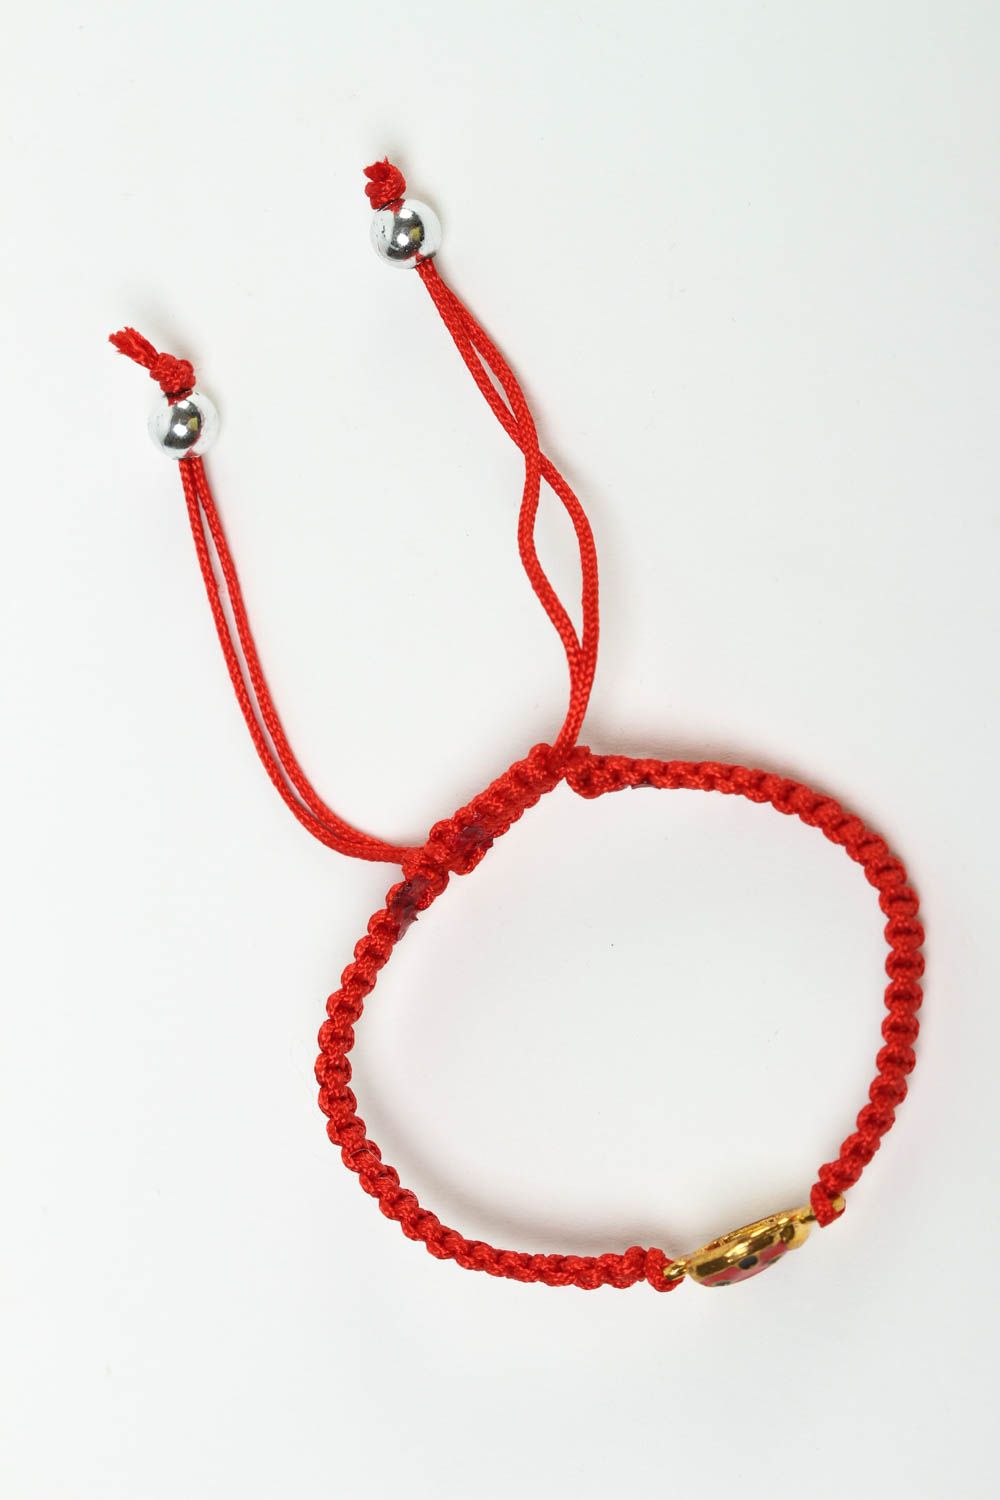 Handmade woven string bracelet friendship bracelet textile jewelry designs photo 2